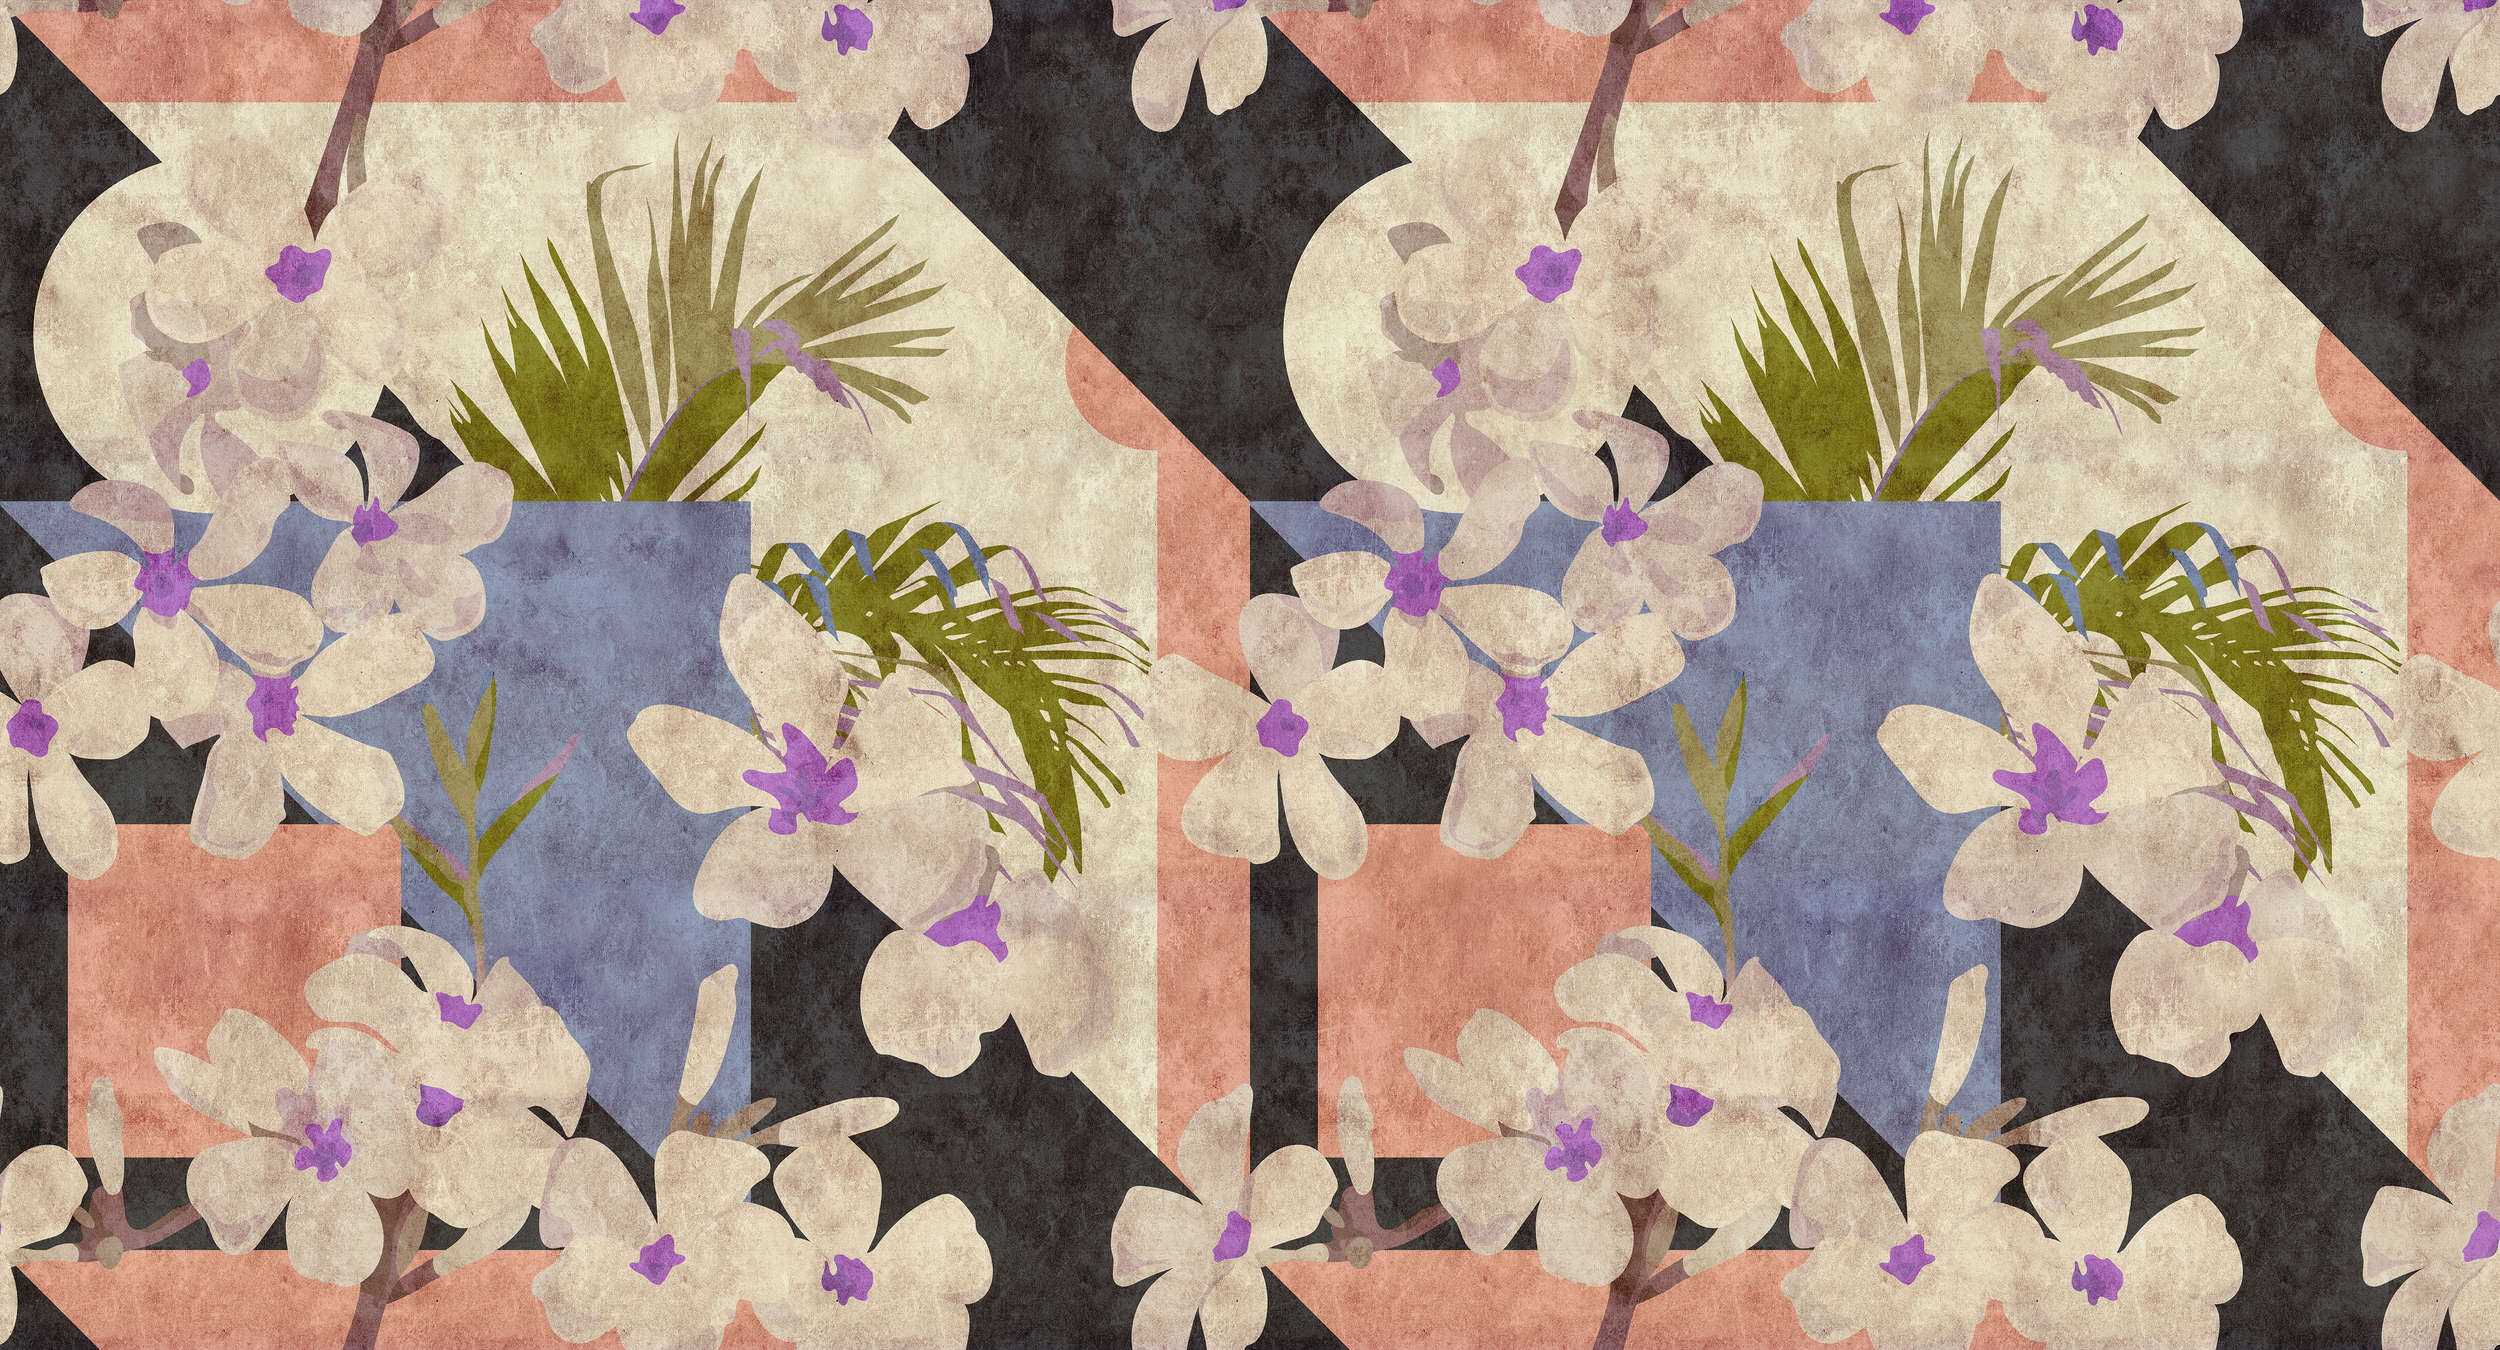             Vintage bloom2 - Vintage digital print wallpaper, blotting paper structure with floral pattern - Beige, Blue | Premium smooth fleece
        